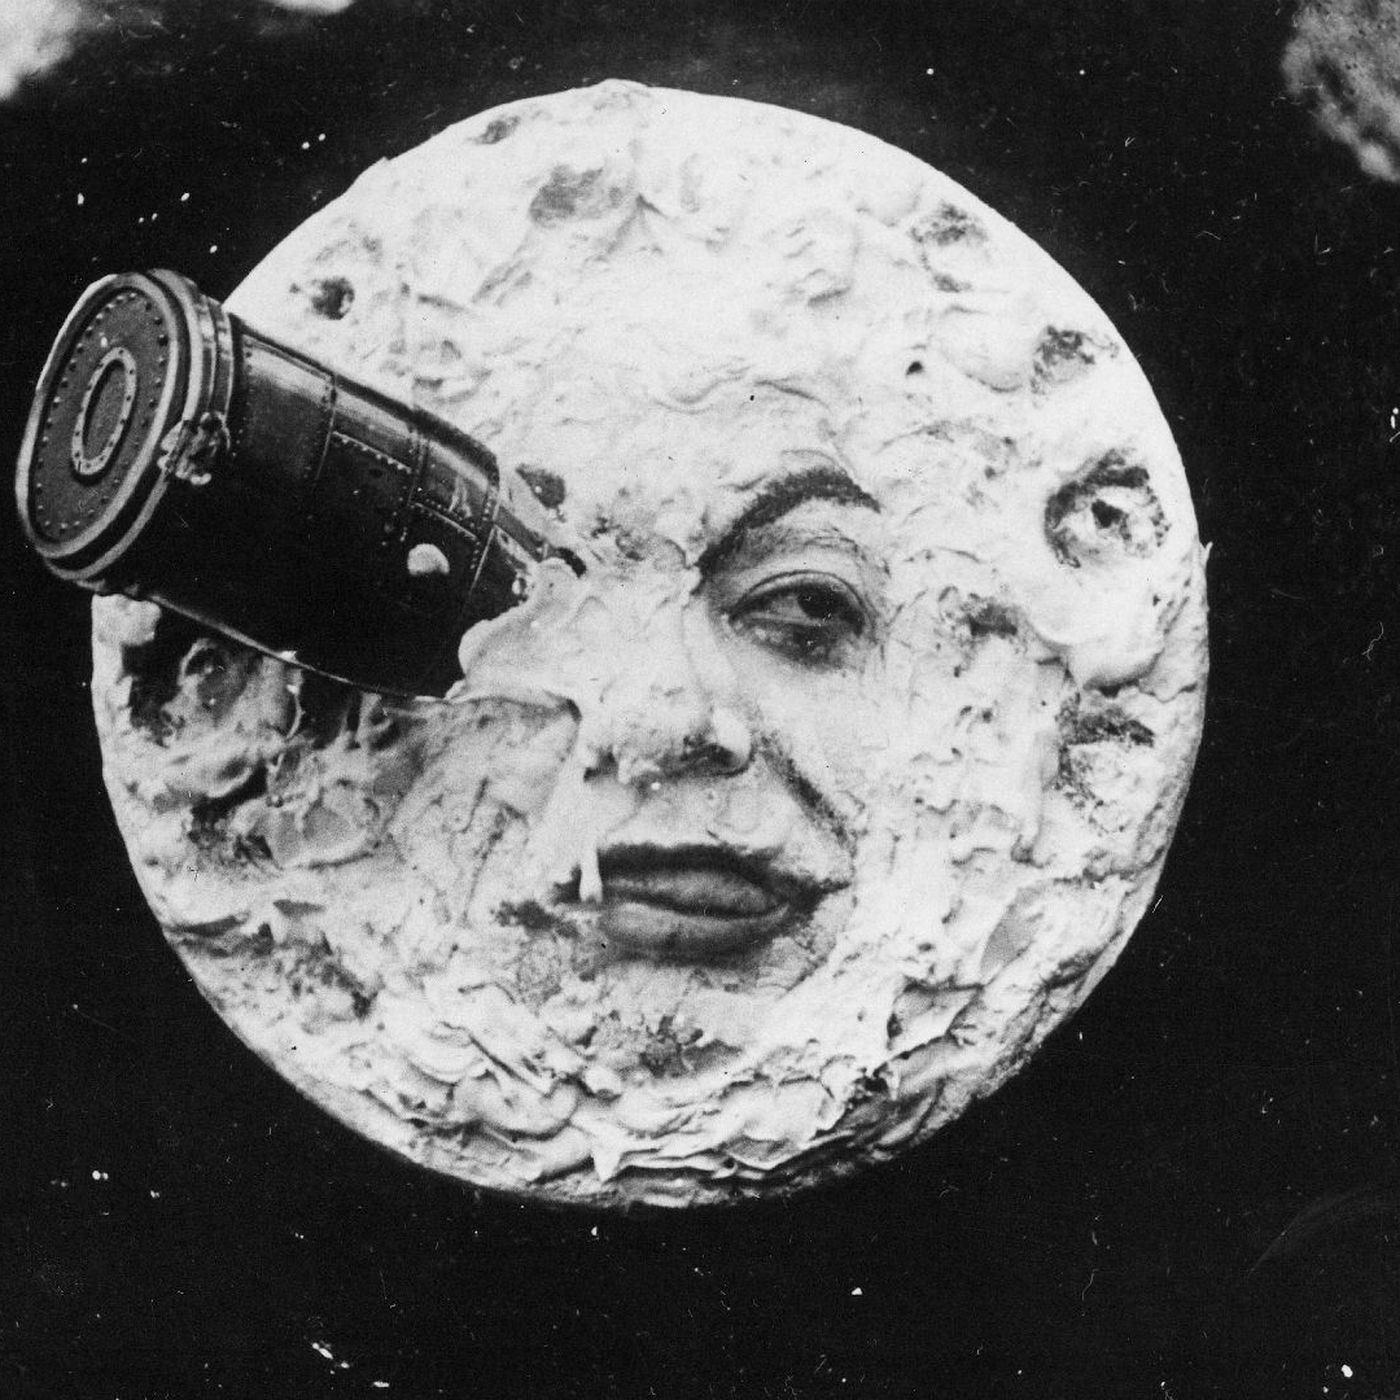 Georges Méliès: how the filmmaker revolutionized cinema 100 years ago - Vox